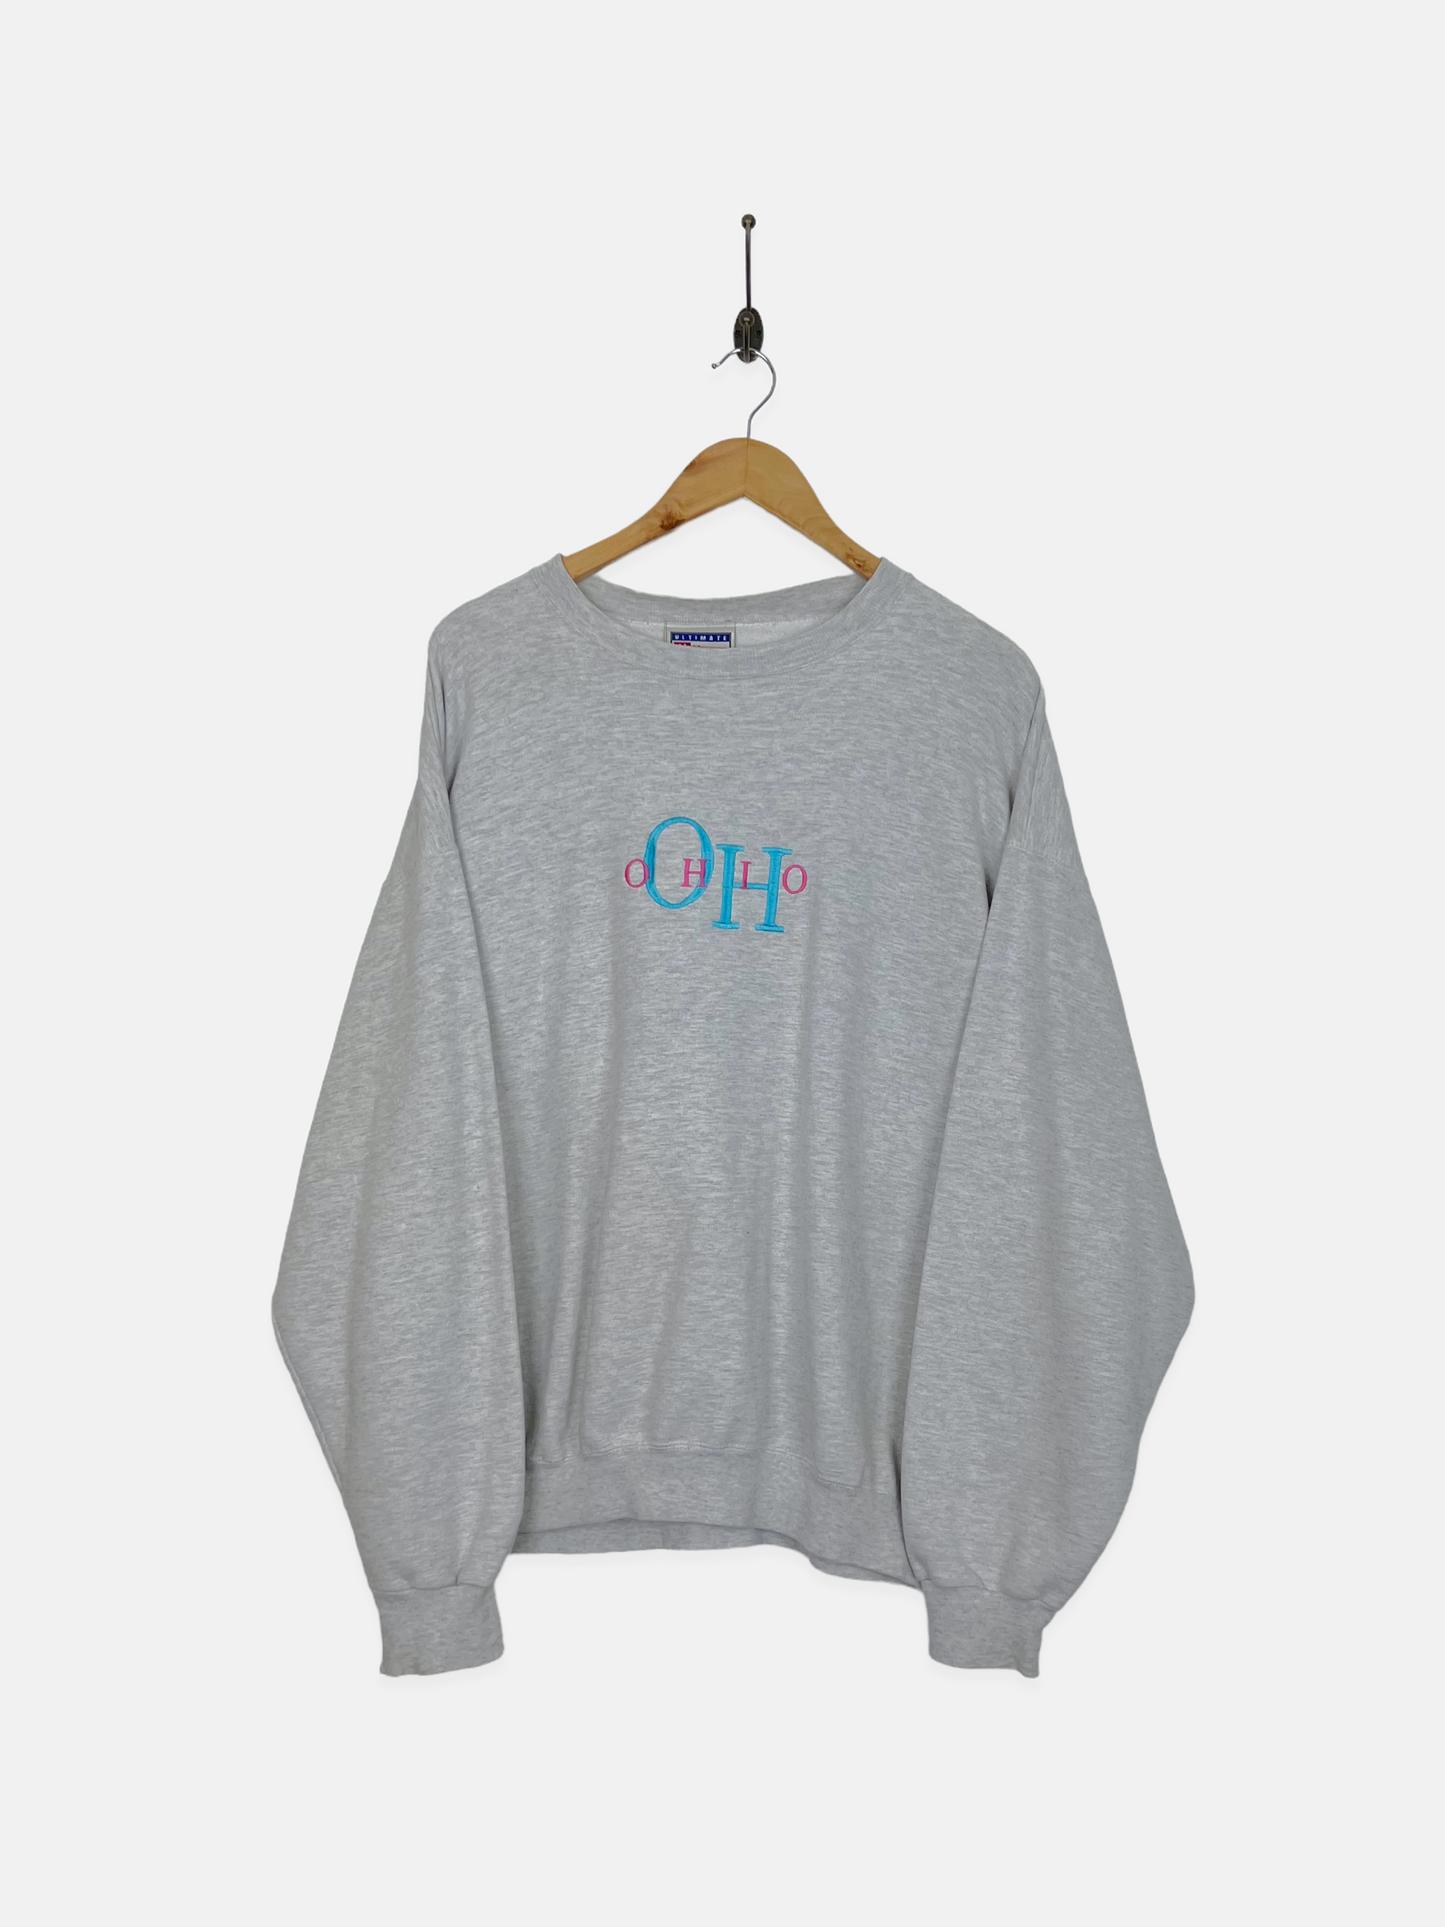 90's Ohio USA Made Embroidered Vintage Sweatshirt Size M-L